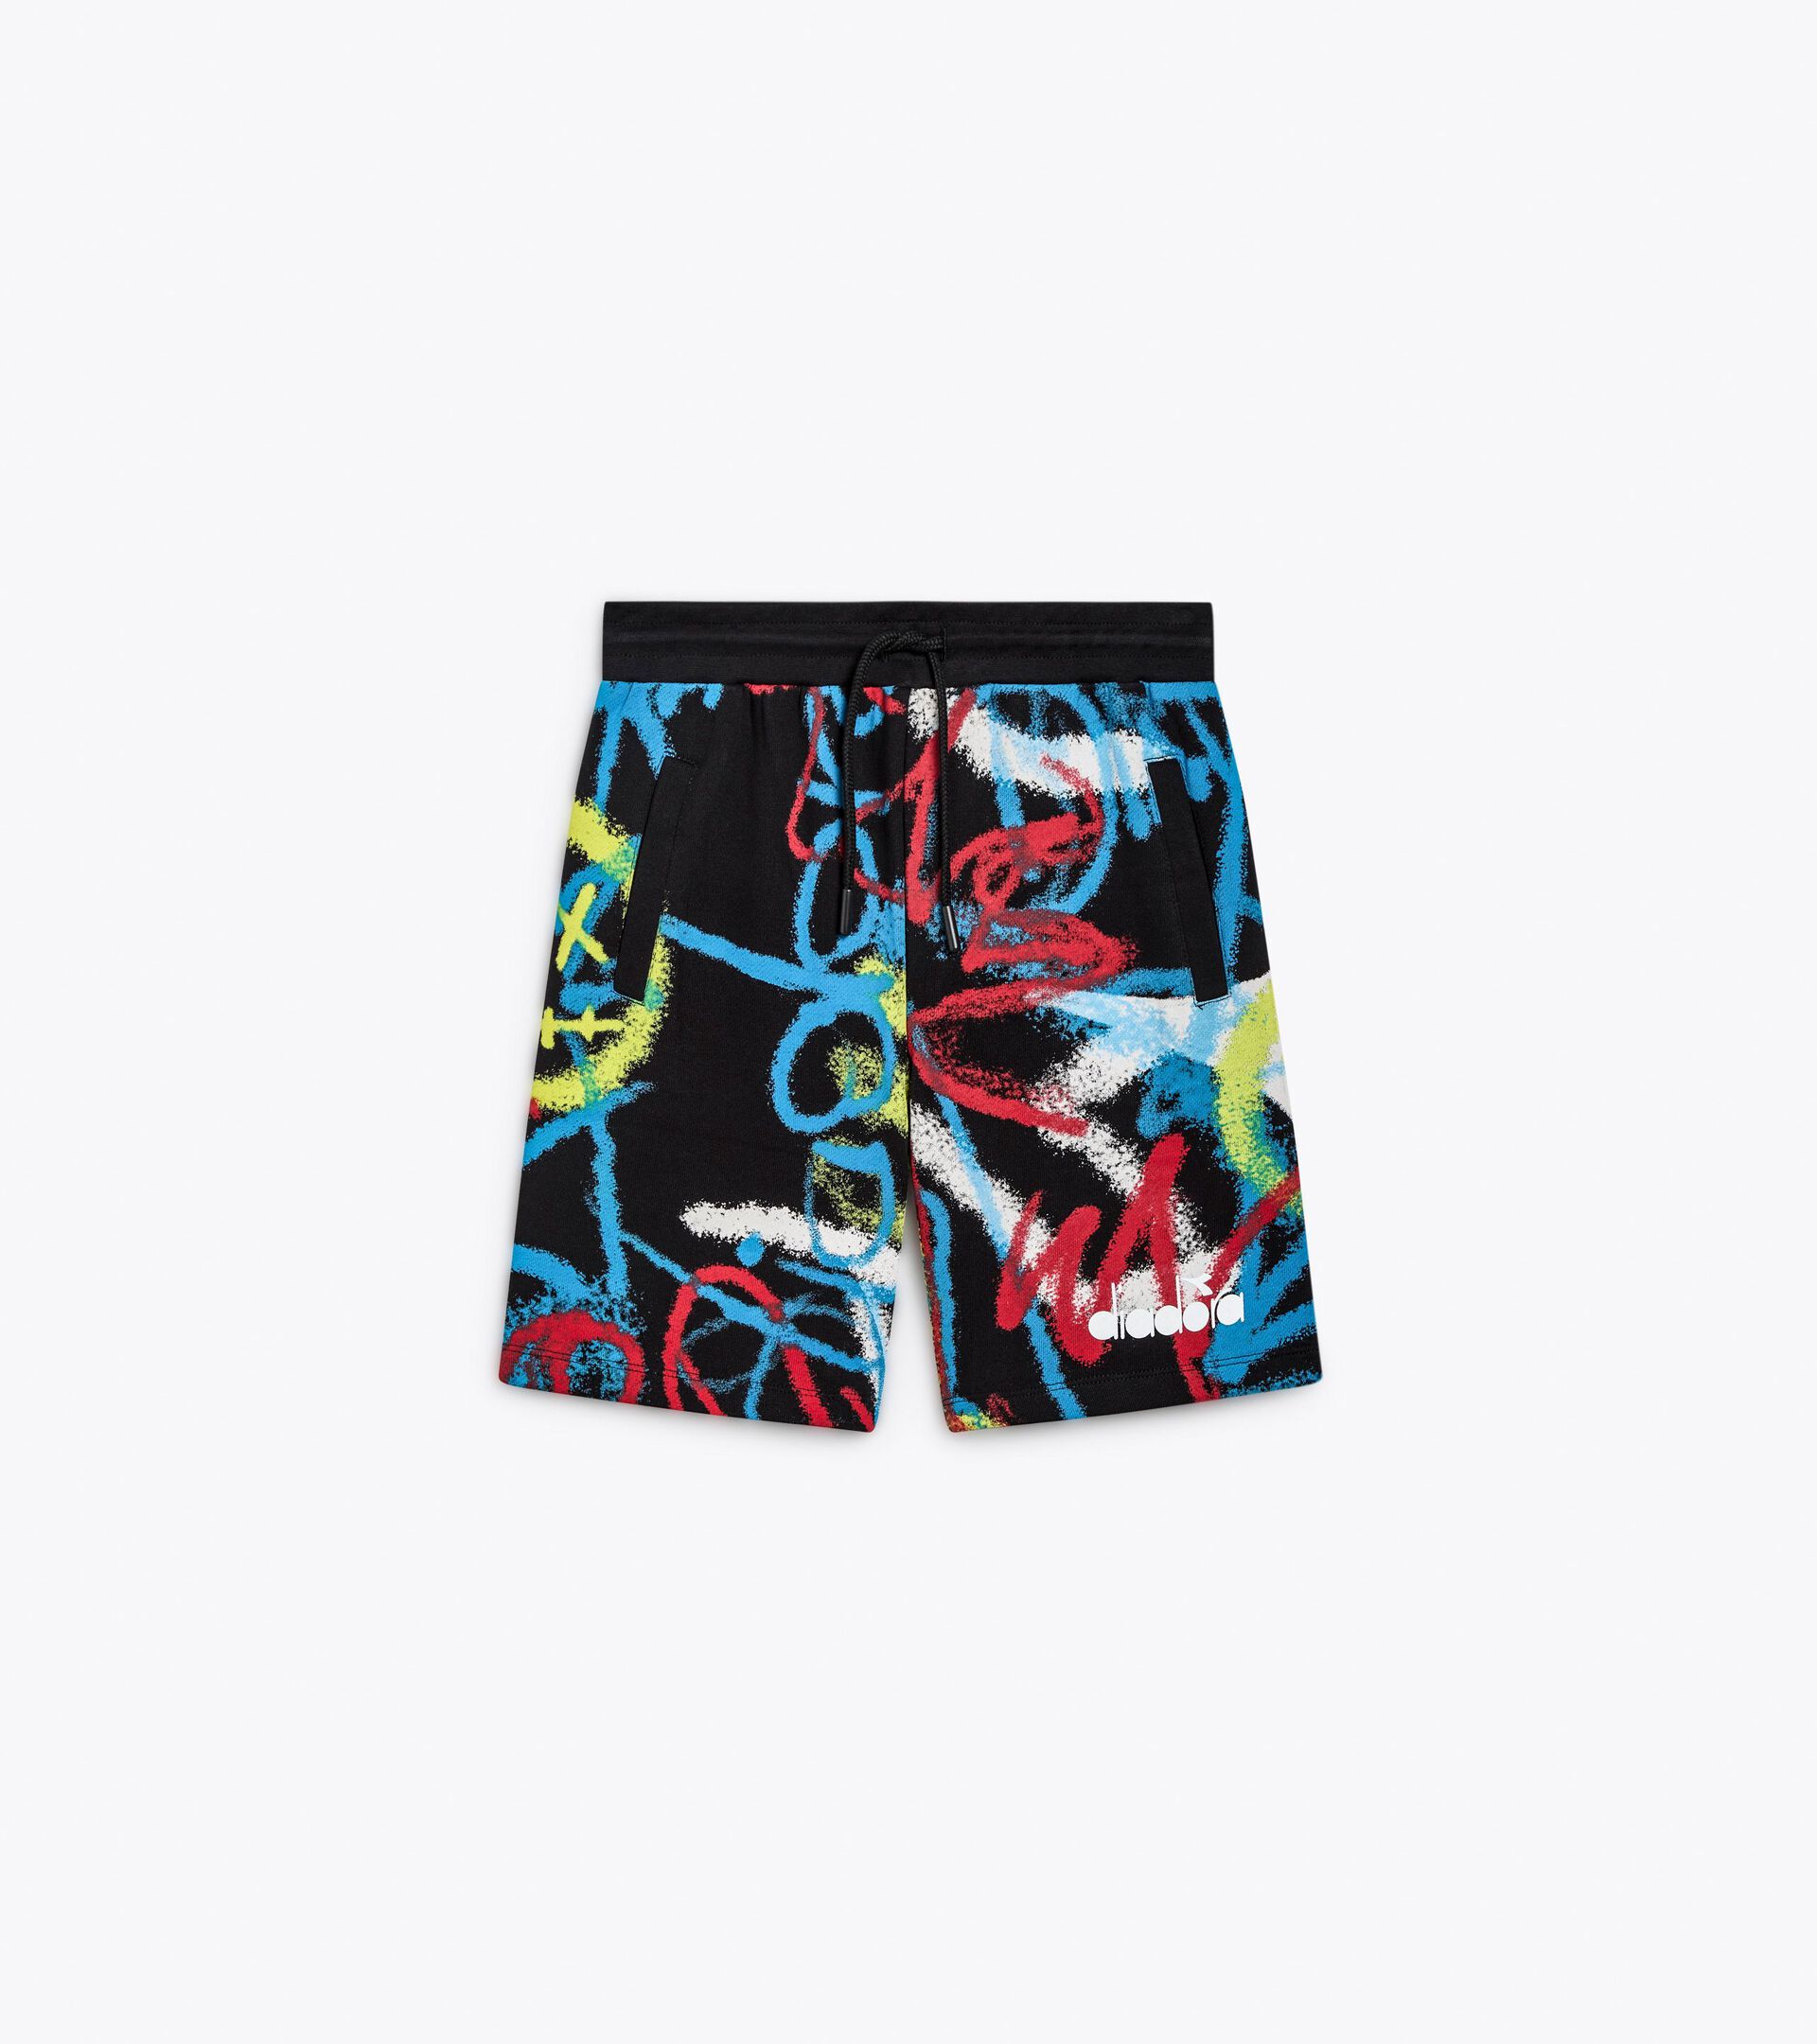 Bermuda shorts - Graffiti-inspired print - Boy
 JB. BERMUDA GRAFFITI BLACK - Diadora